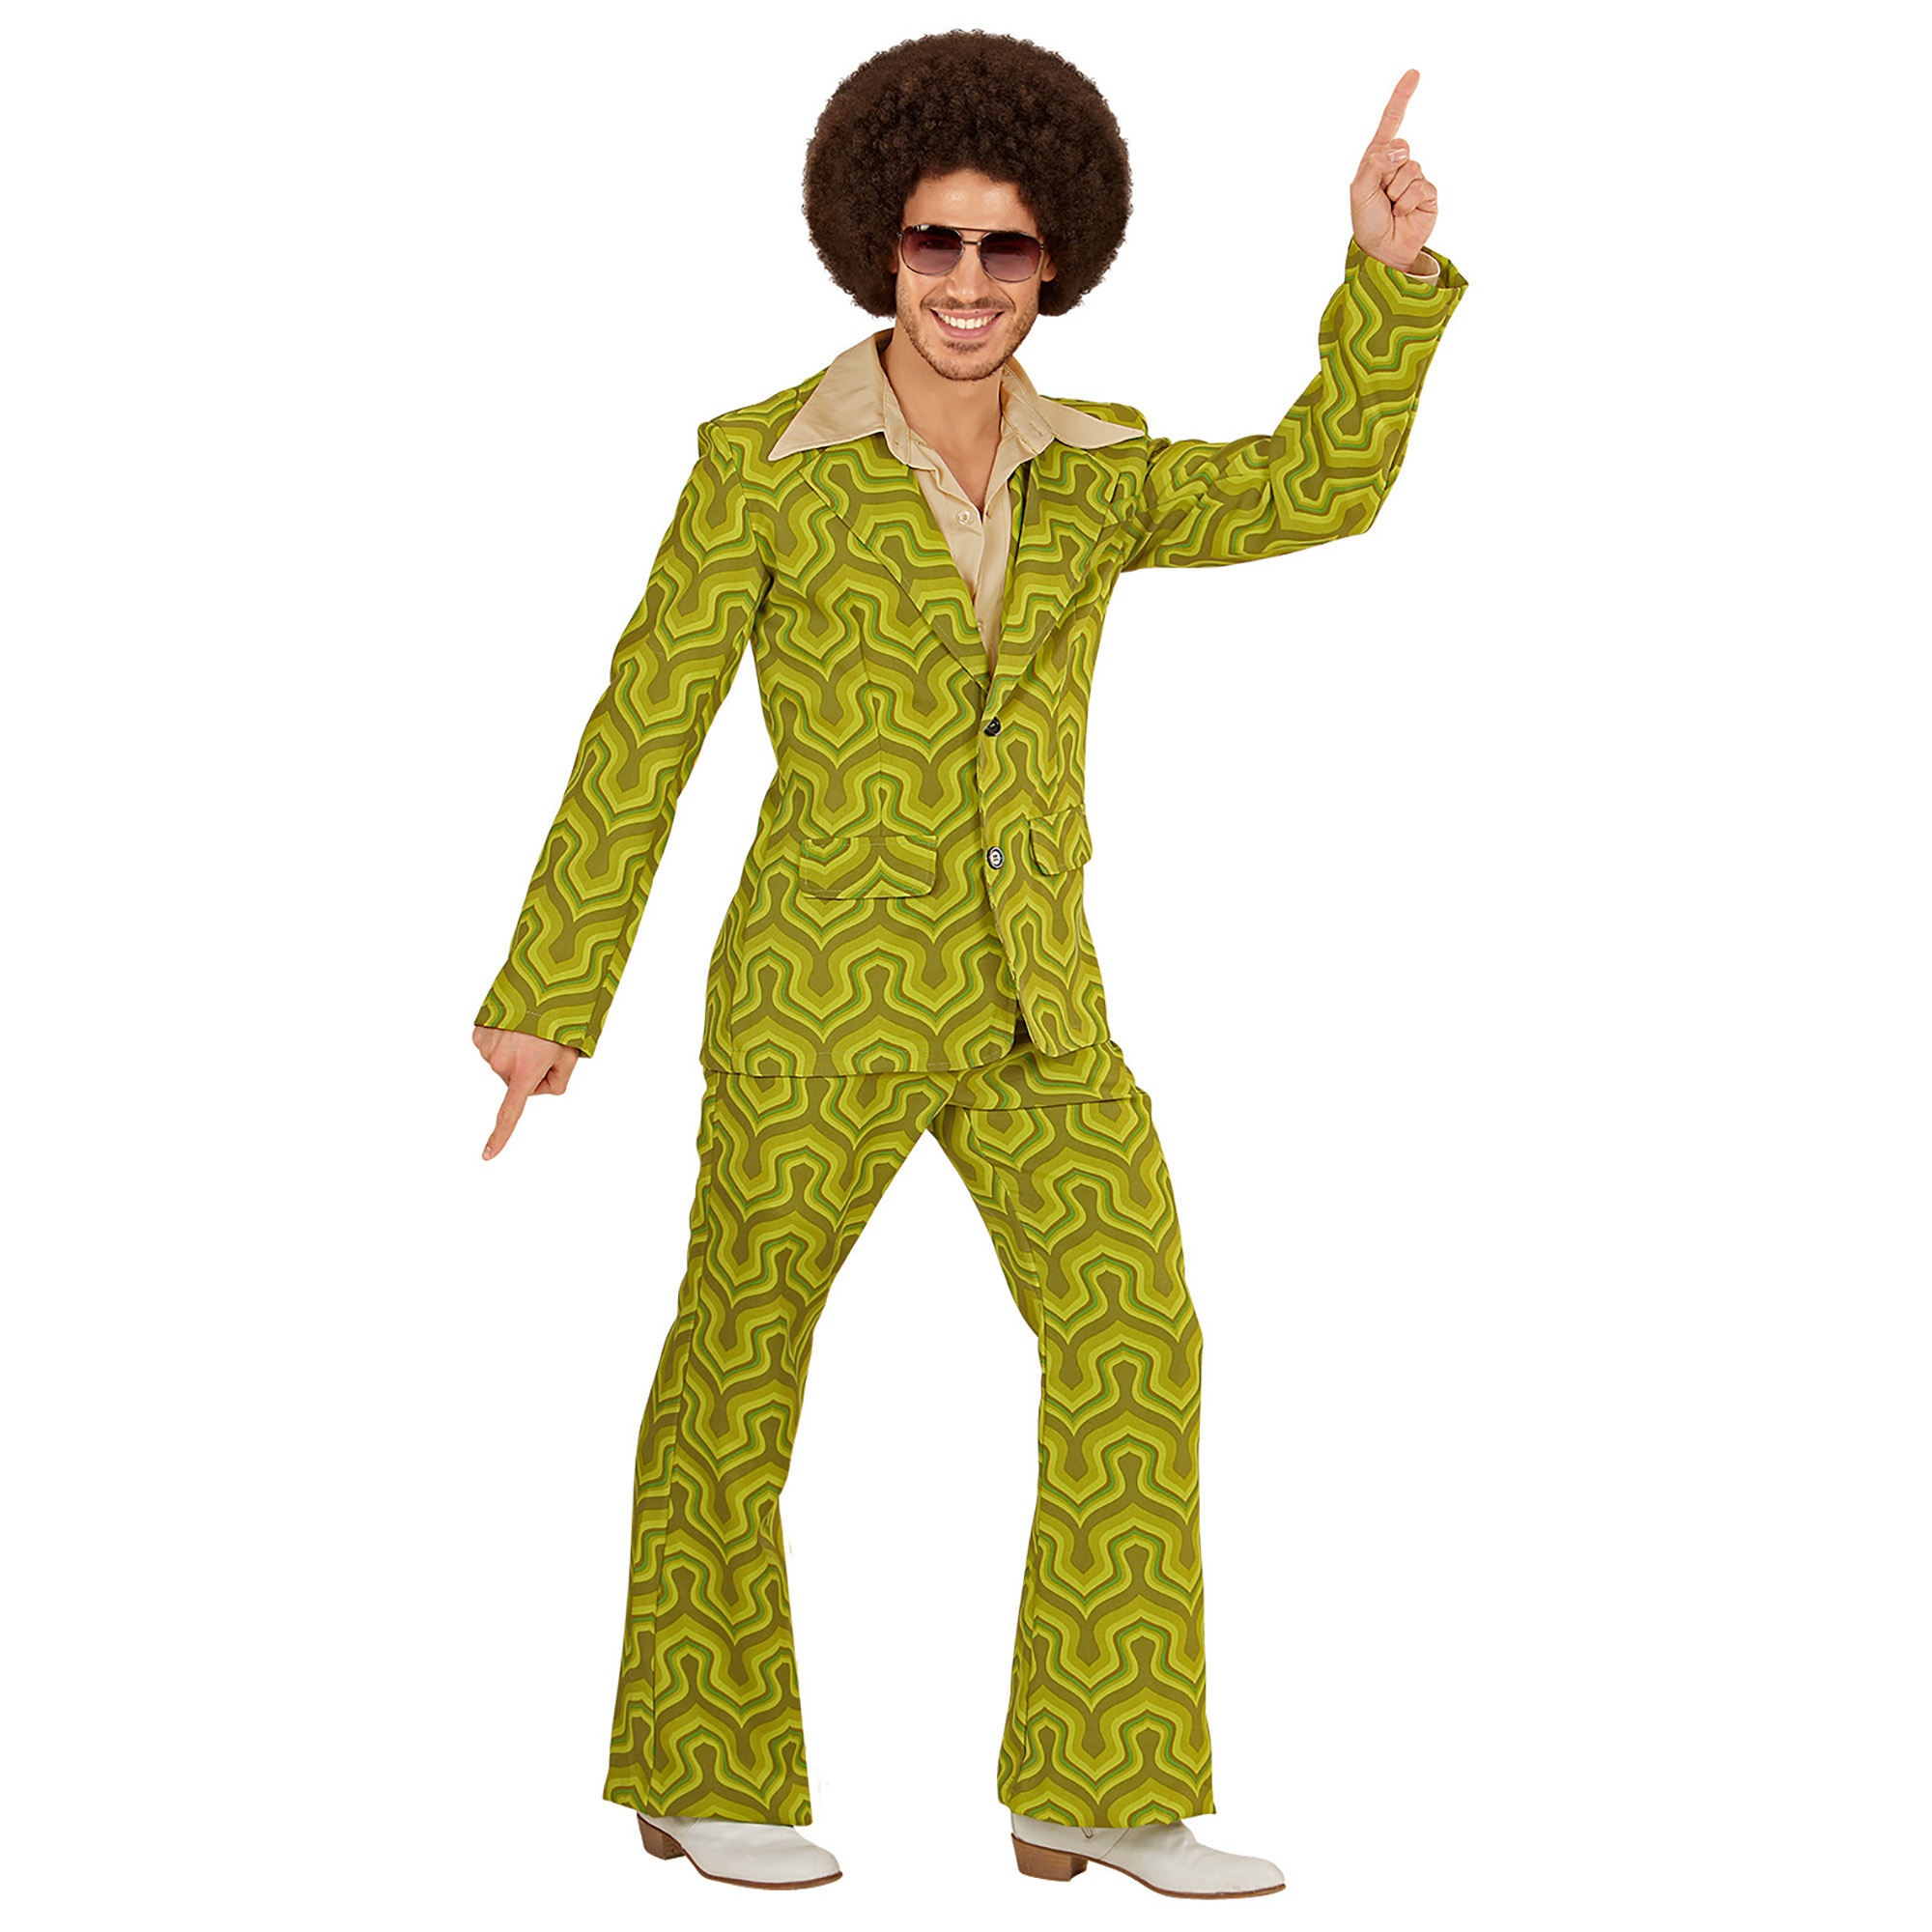 Groovy 70's disco kostuum man saterday night fever groen retro